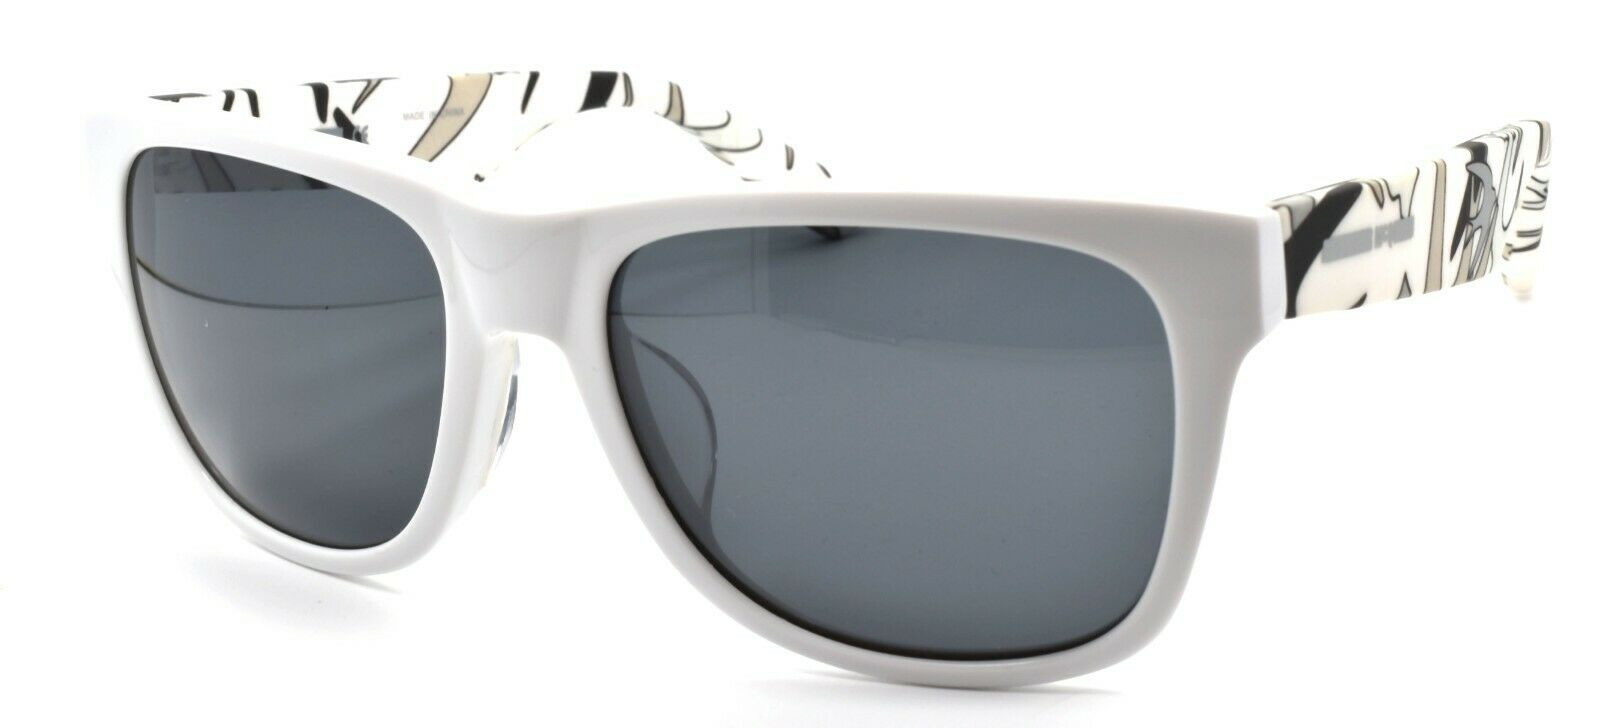 1-McQ Alexander McQueen MQ0018SA 003 Women's Sunglasses White / Gray-889652008578-IKSpecs